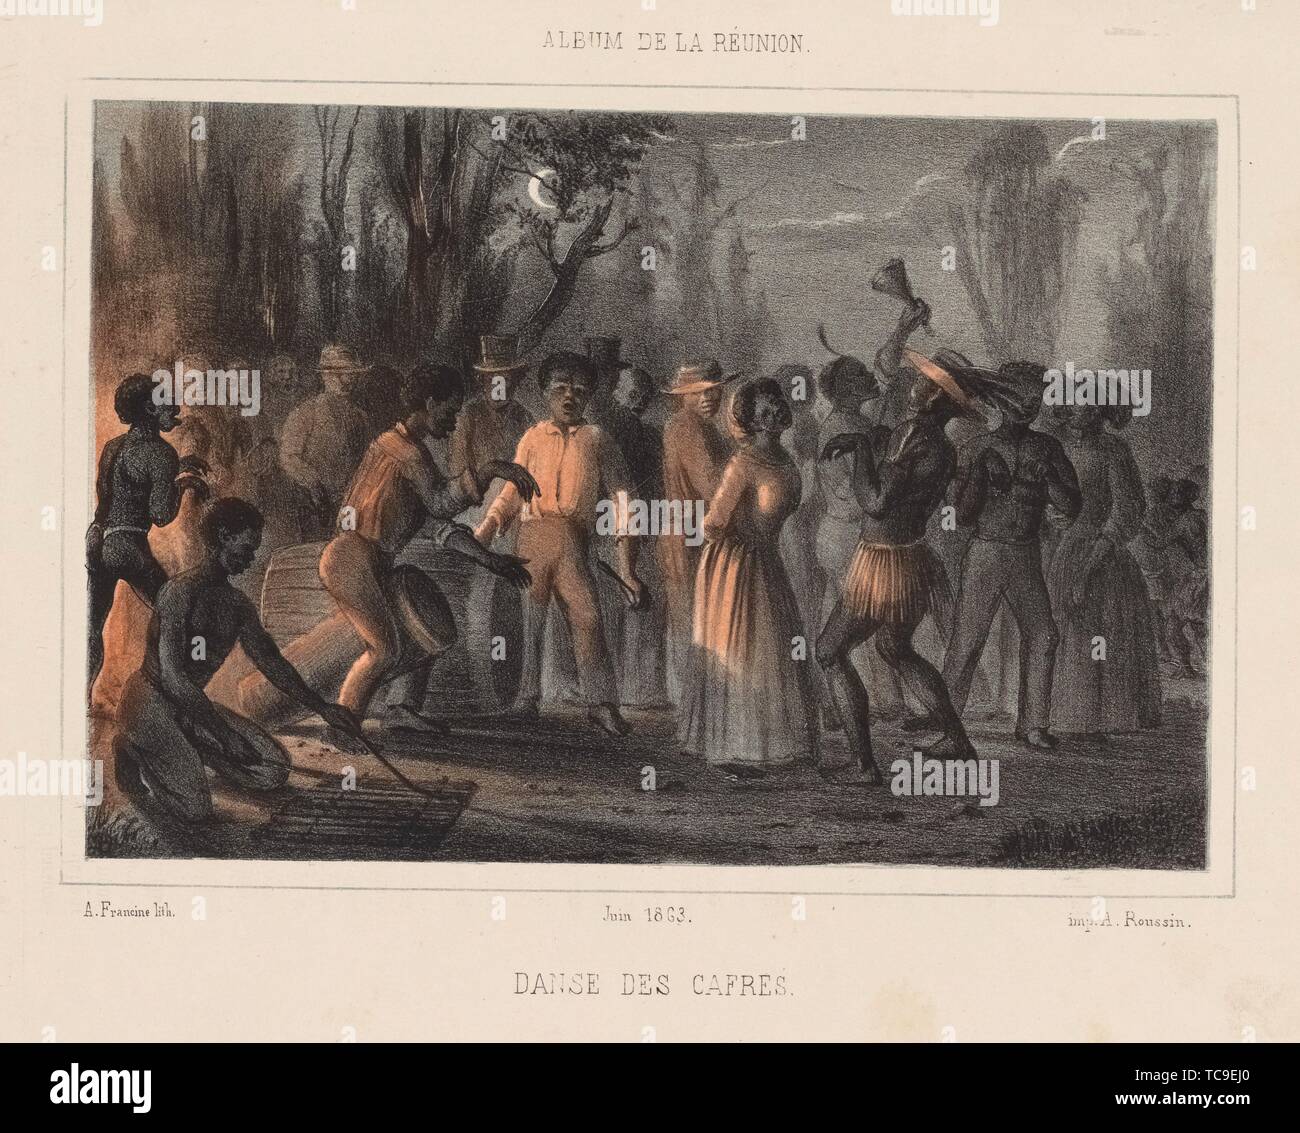 Danse des cafres. Roussin, Antoine, 1819-1894 (Artist) Francine, A. (Lithographer). Prints depicting dance Subjects. Date Issued: 1863-06. Dance, Stock Photo